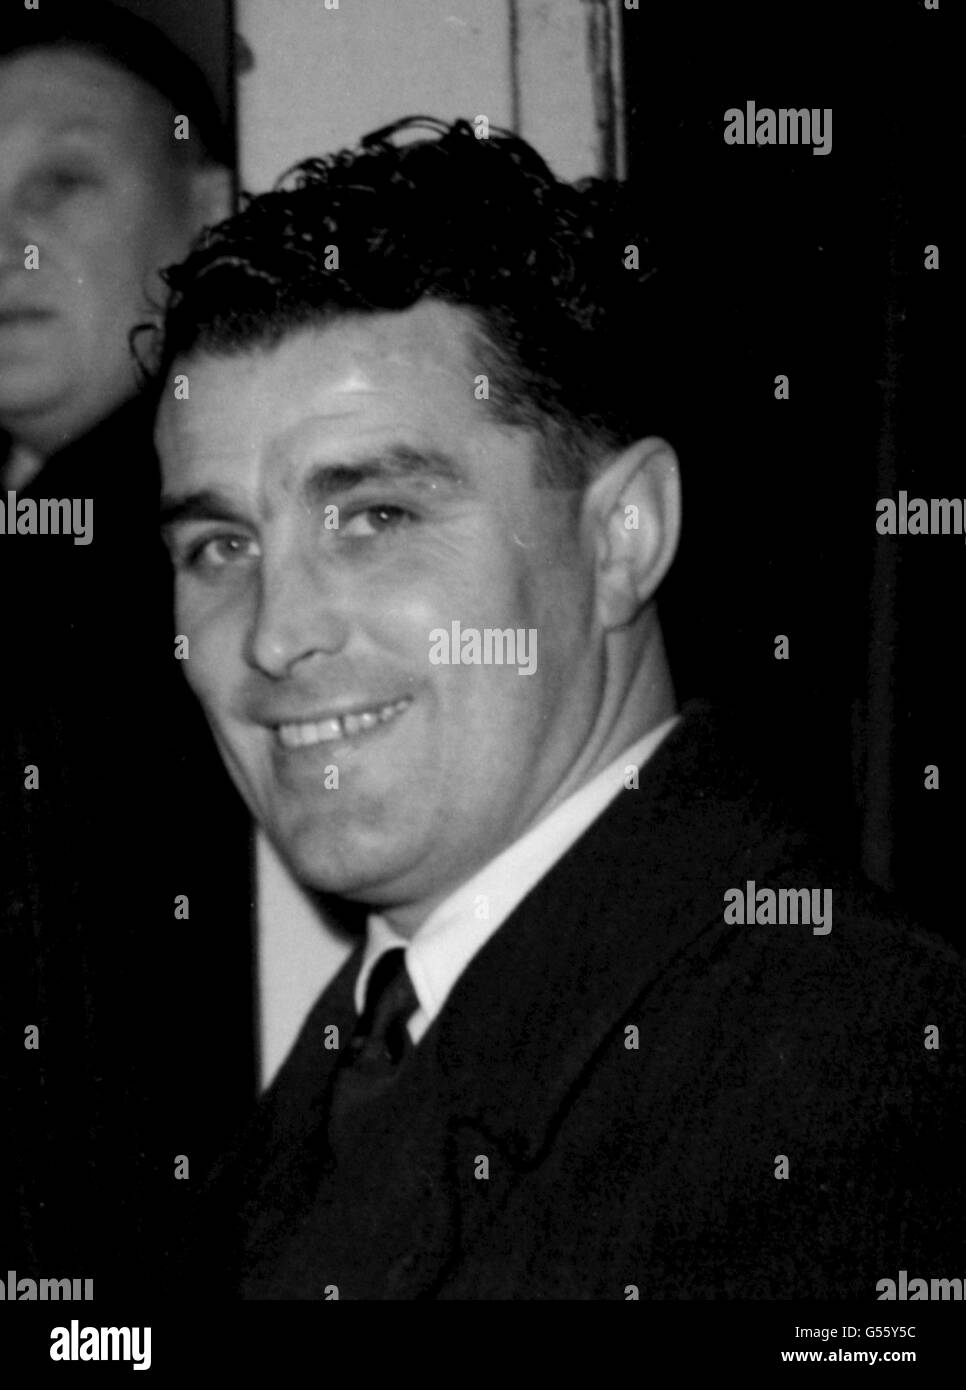 PA FOTO 01.10.1951 ARSENAL FUßBALLER LESLIE COMPTON. Stockfoto